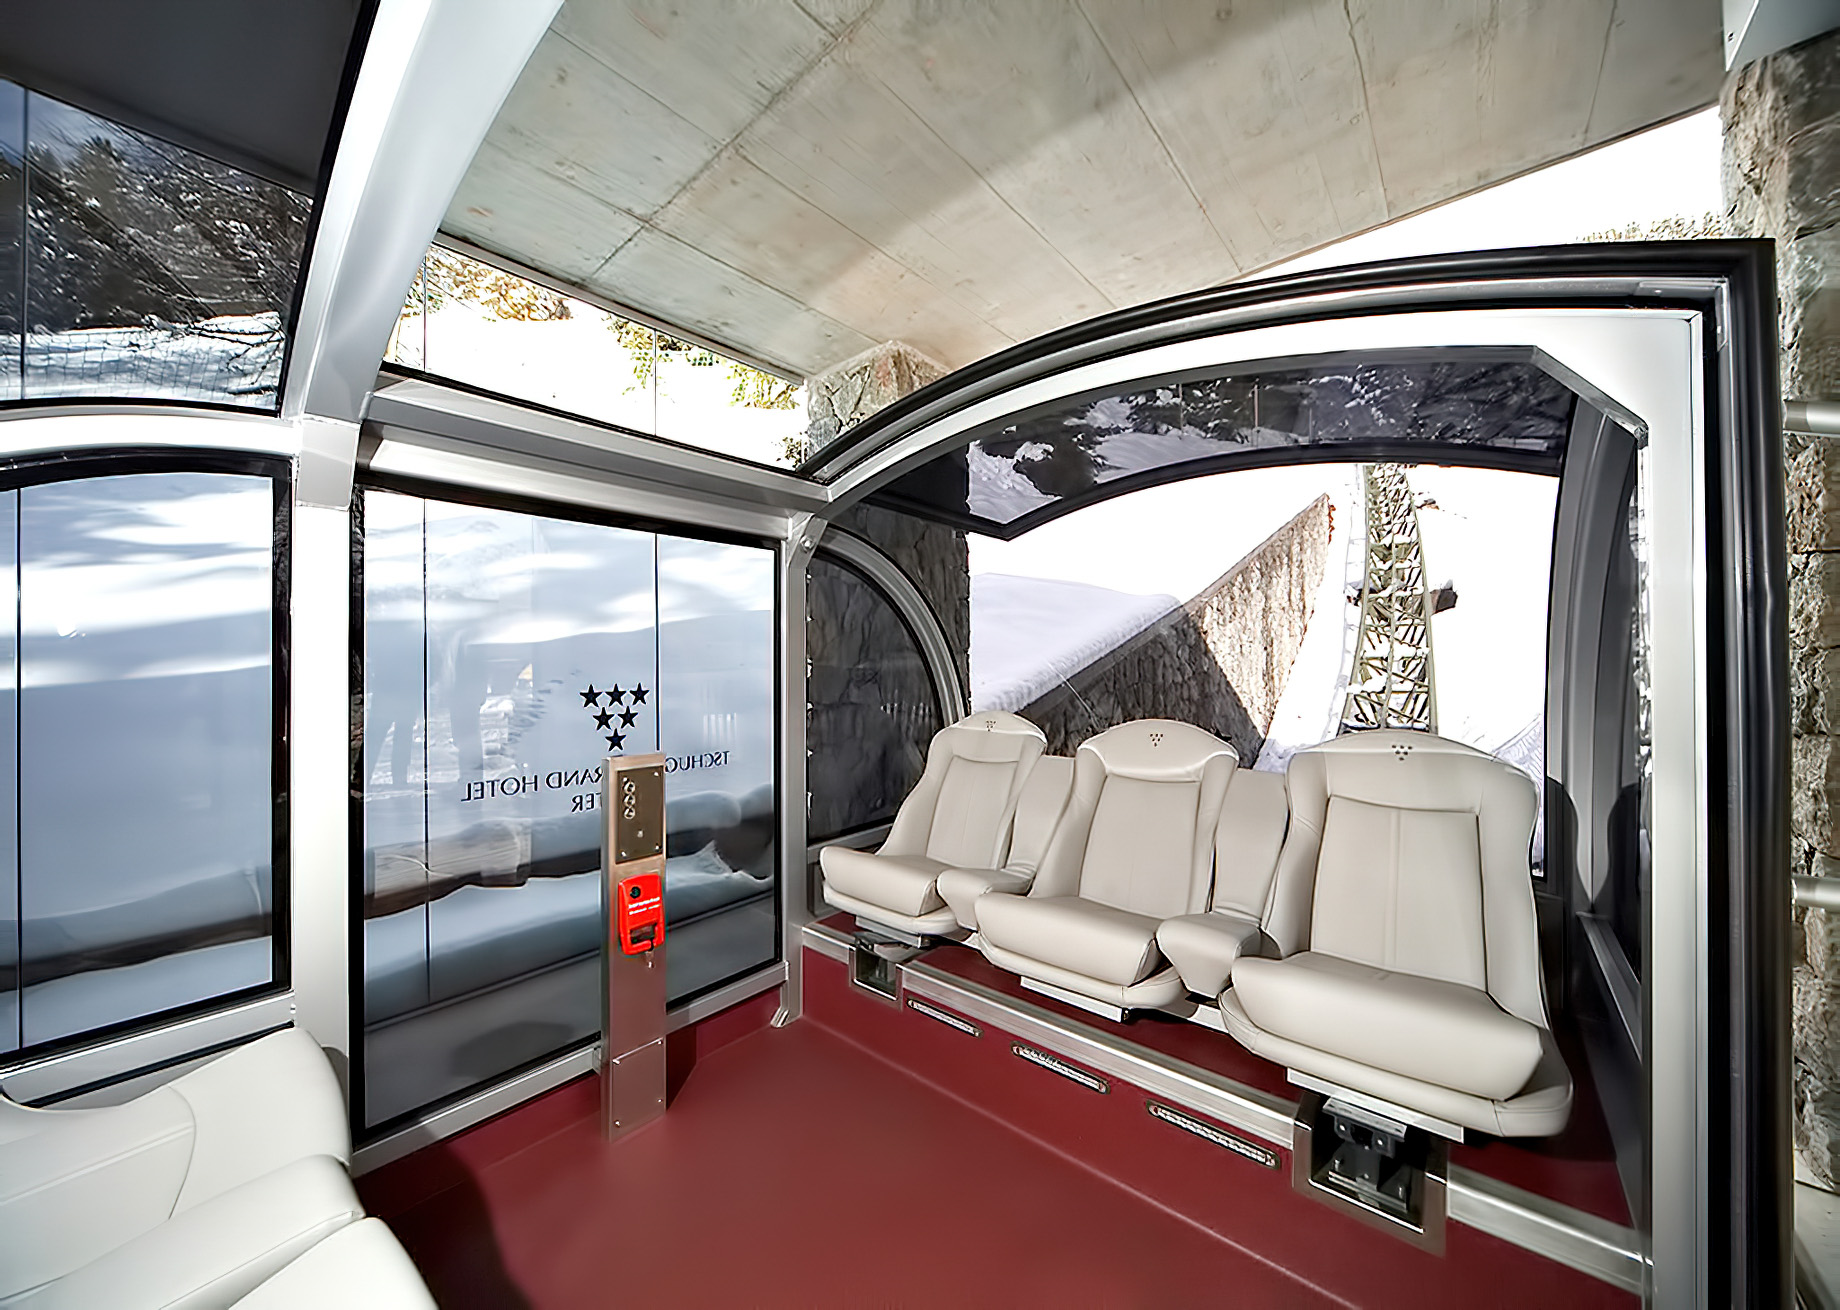 Tschuggen Grand Hotel - Arosa, Switzerland - Sky Tram Car Interior